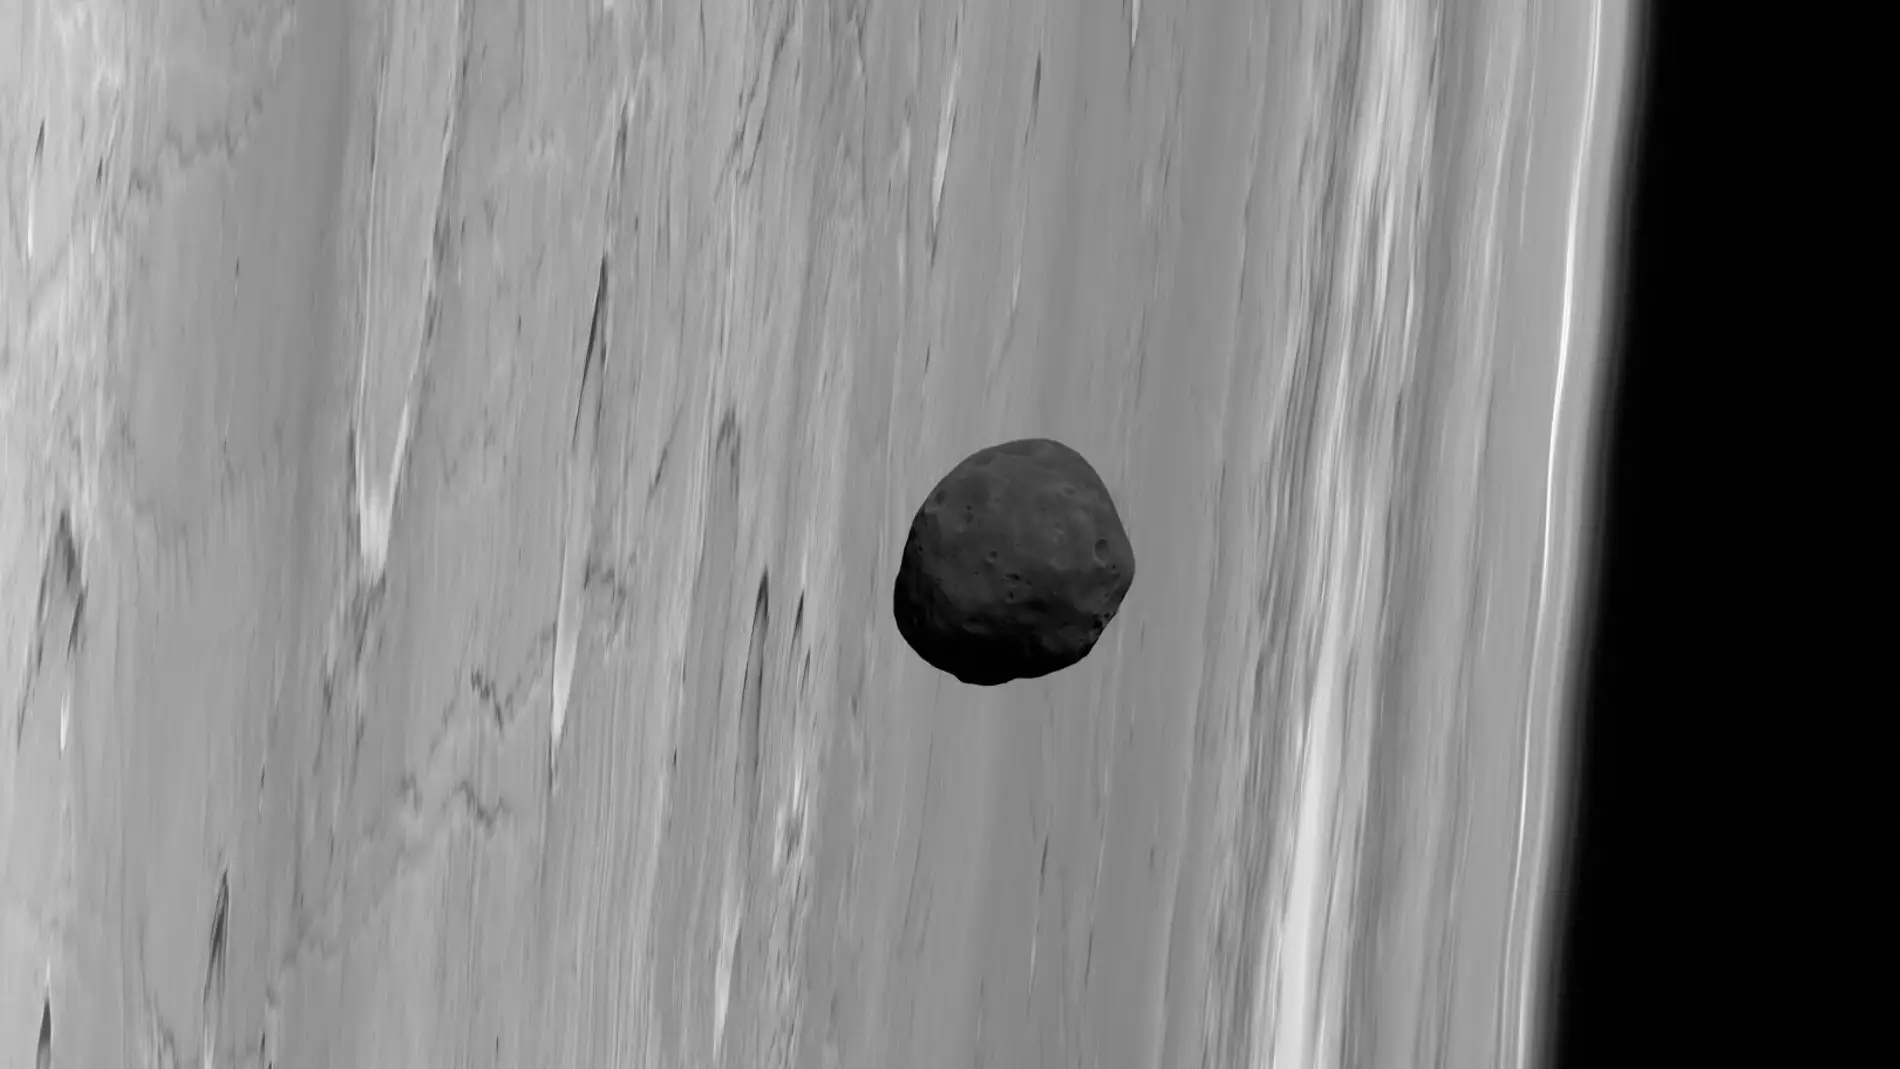 El satélite Phobos captado por la sonda europea Mars Express